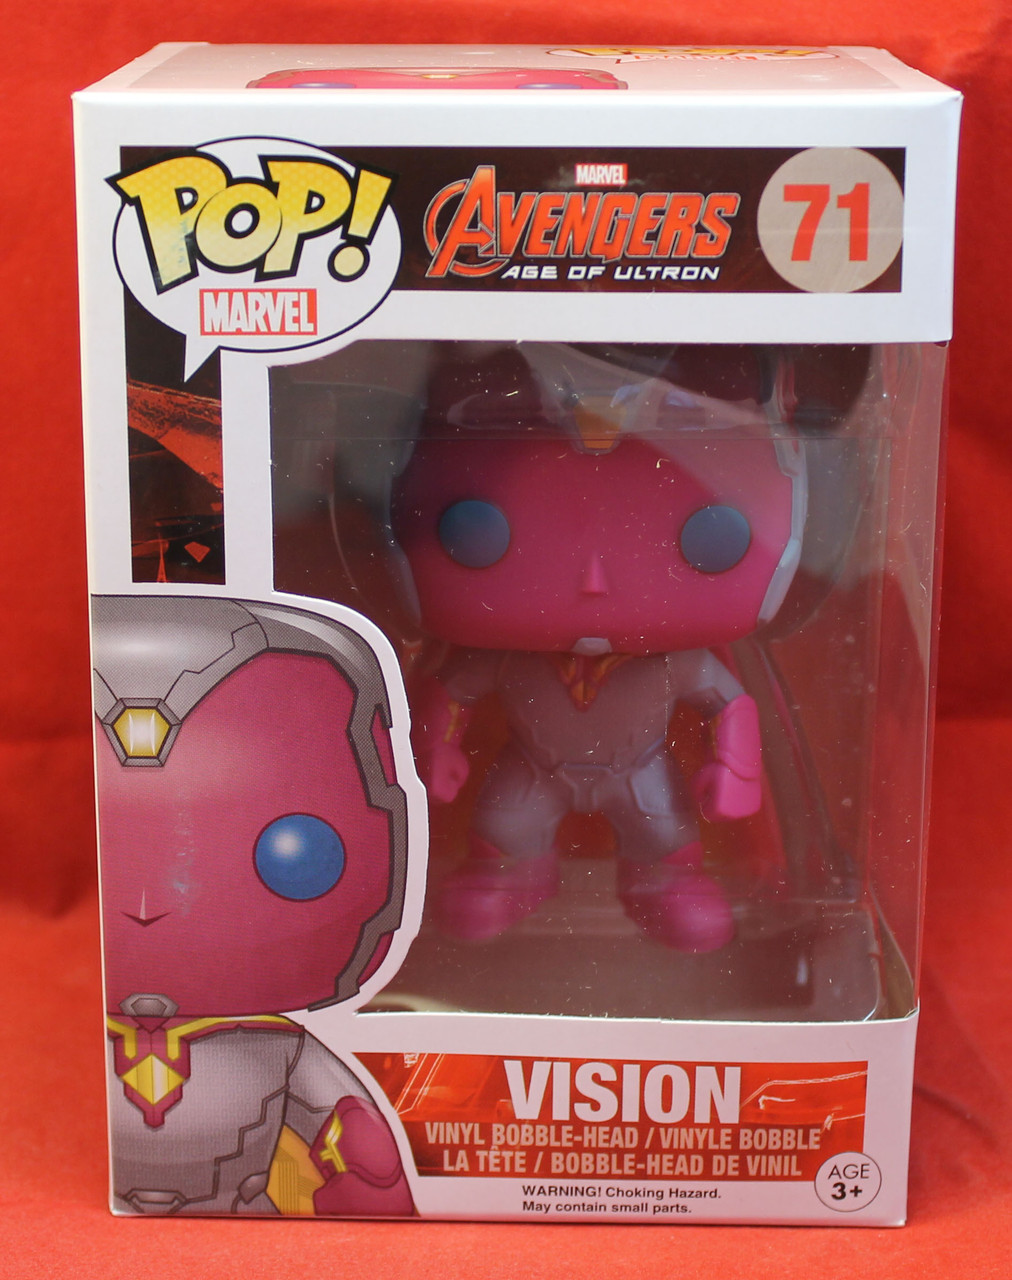 Marvel Pop! Vinyl Figure Avengers Age Ultron - 71 Vision